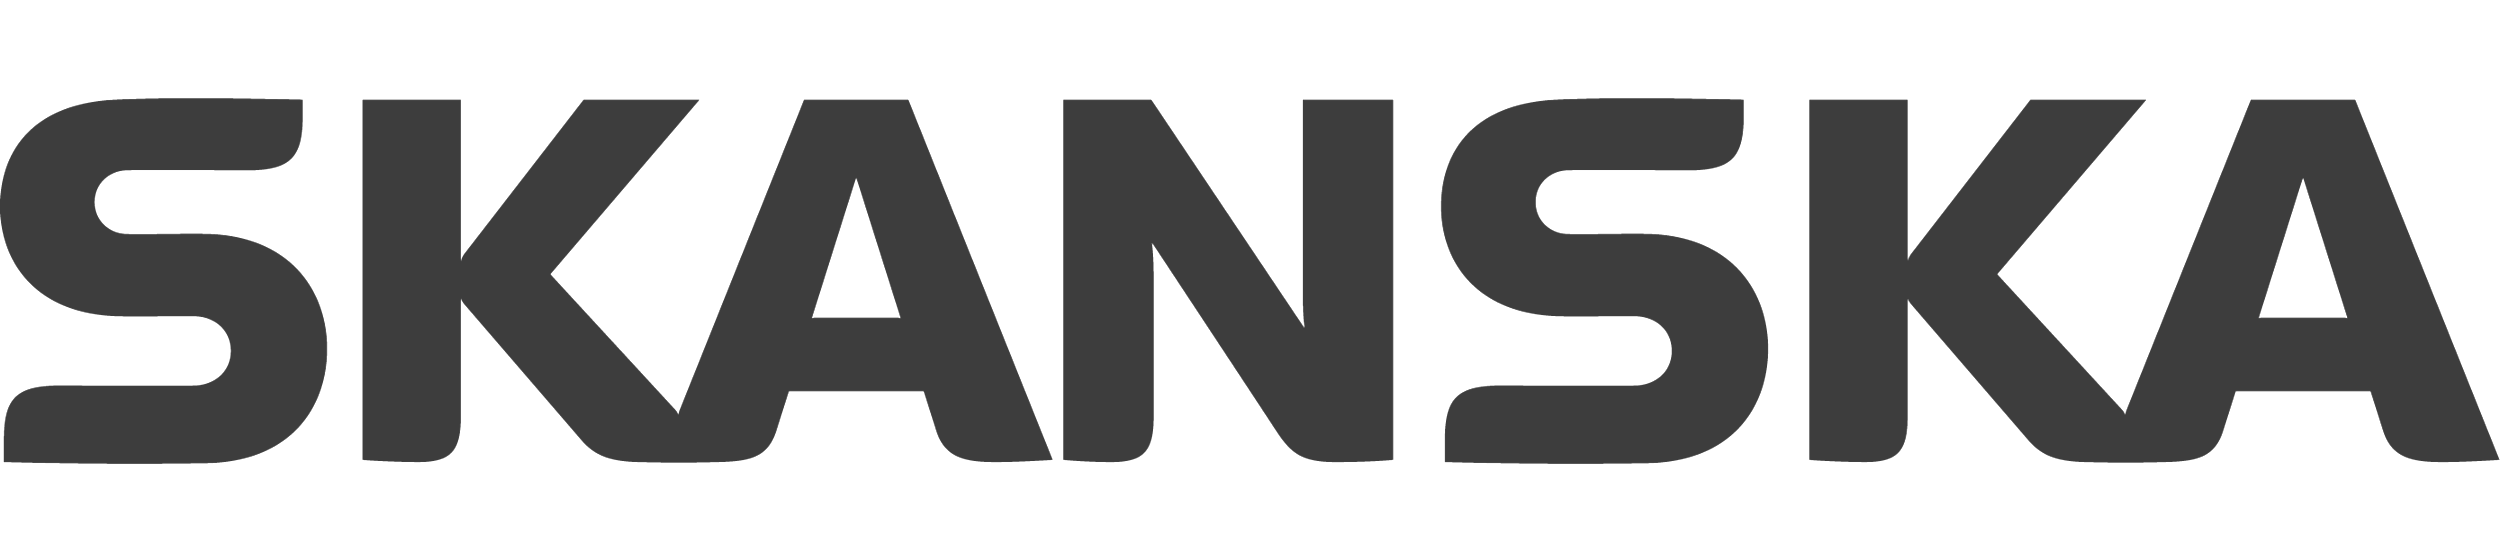 skanska-logo copy.png